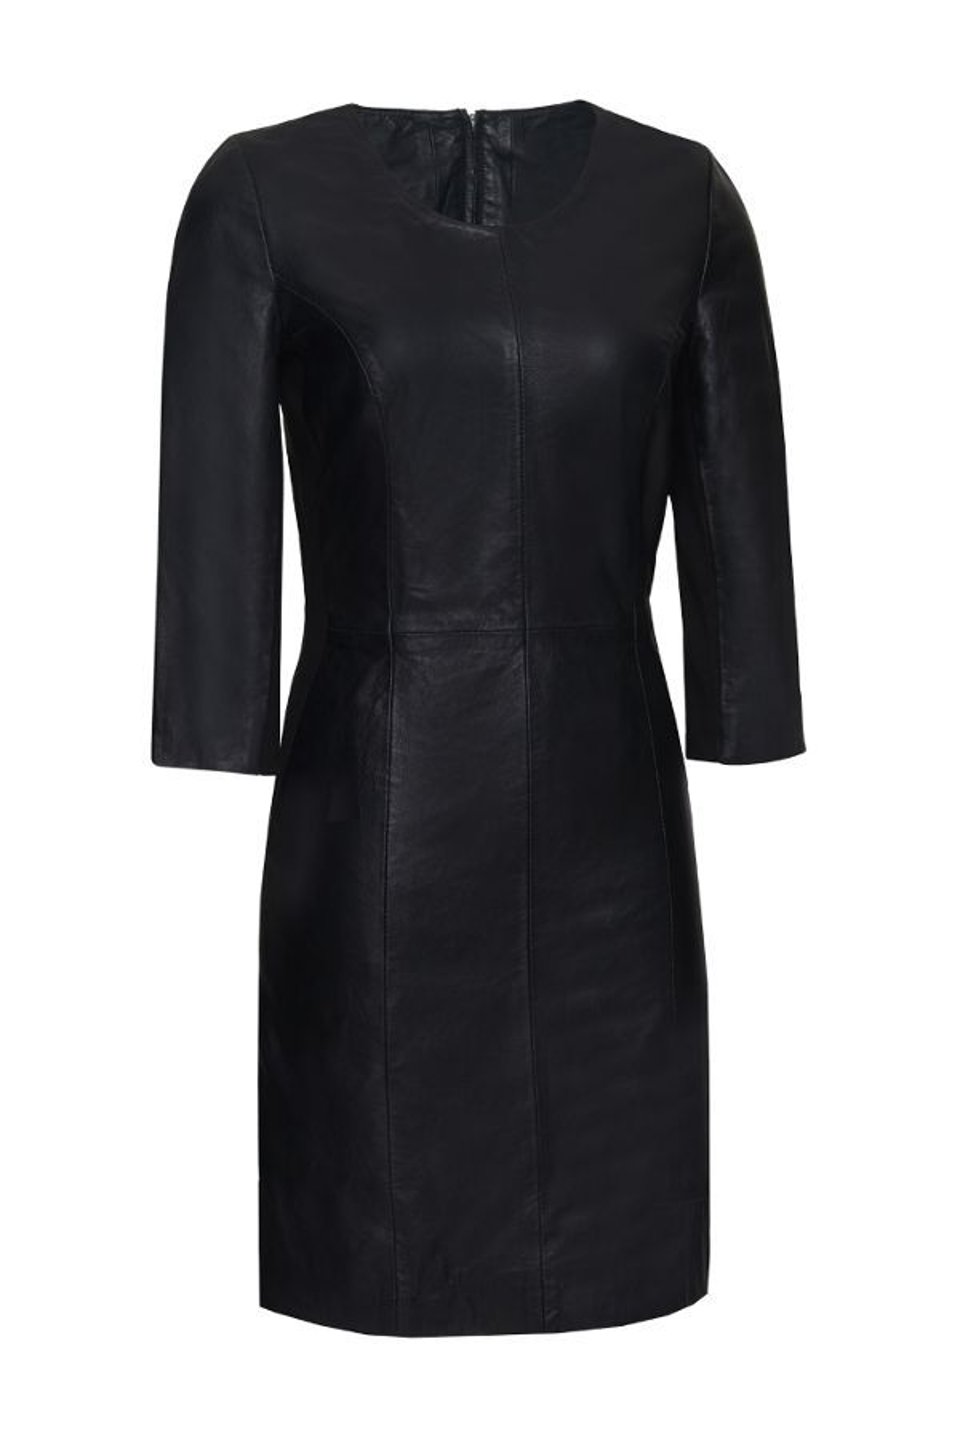 Dress 020 - Black